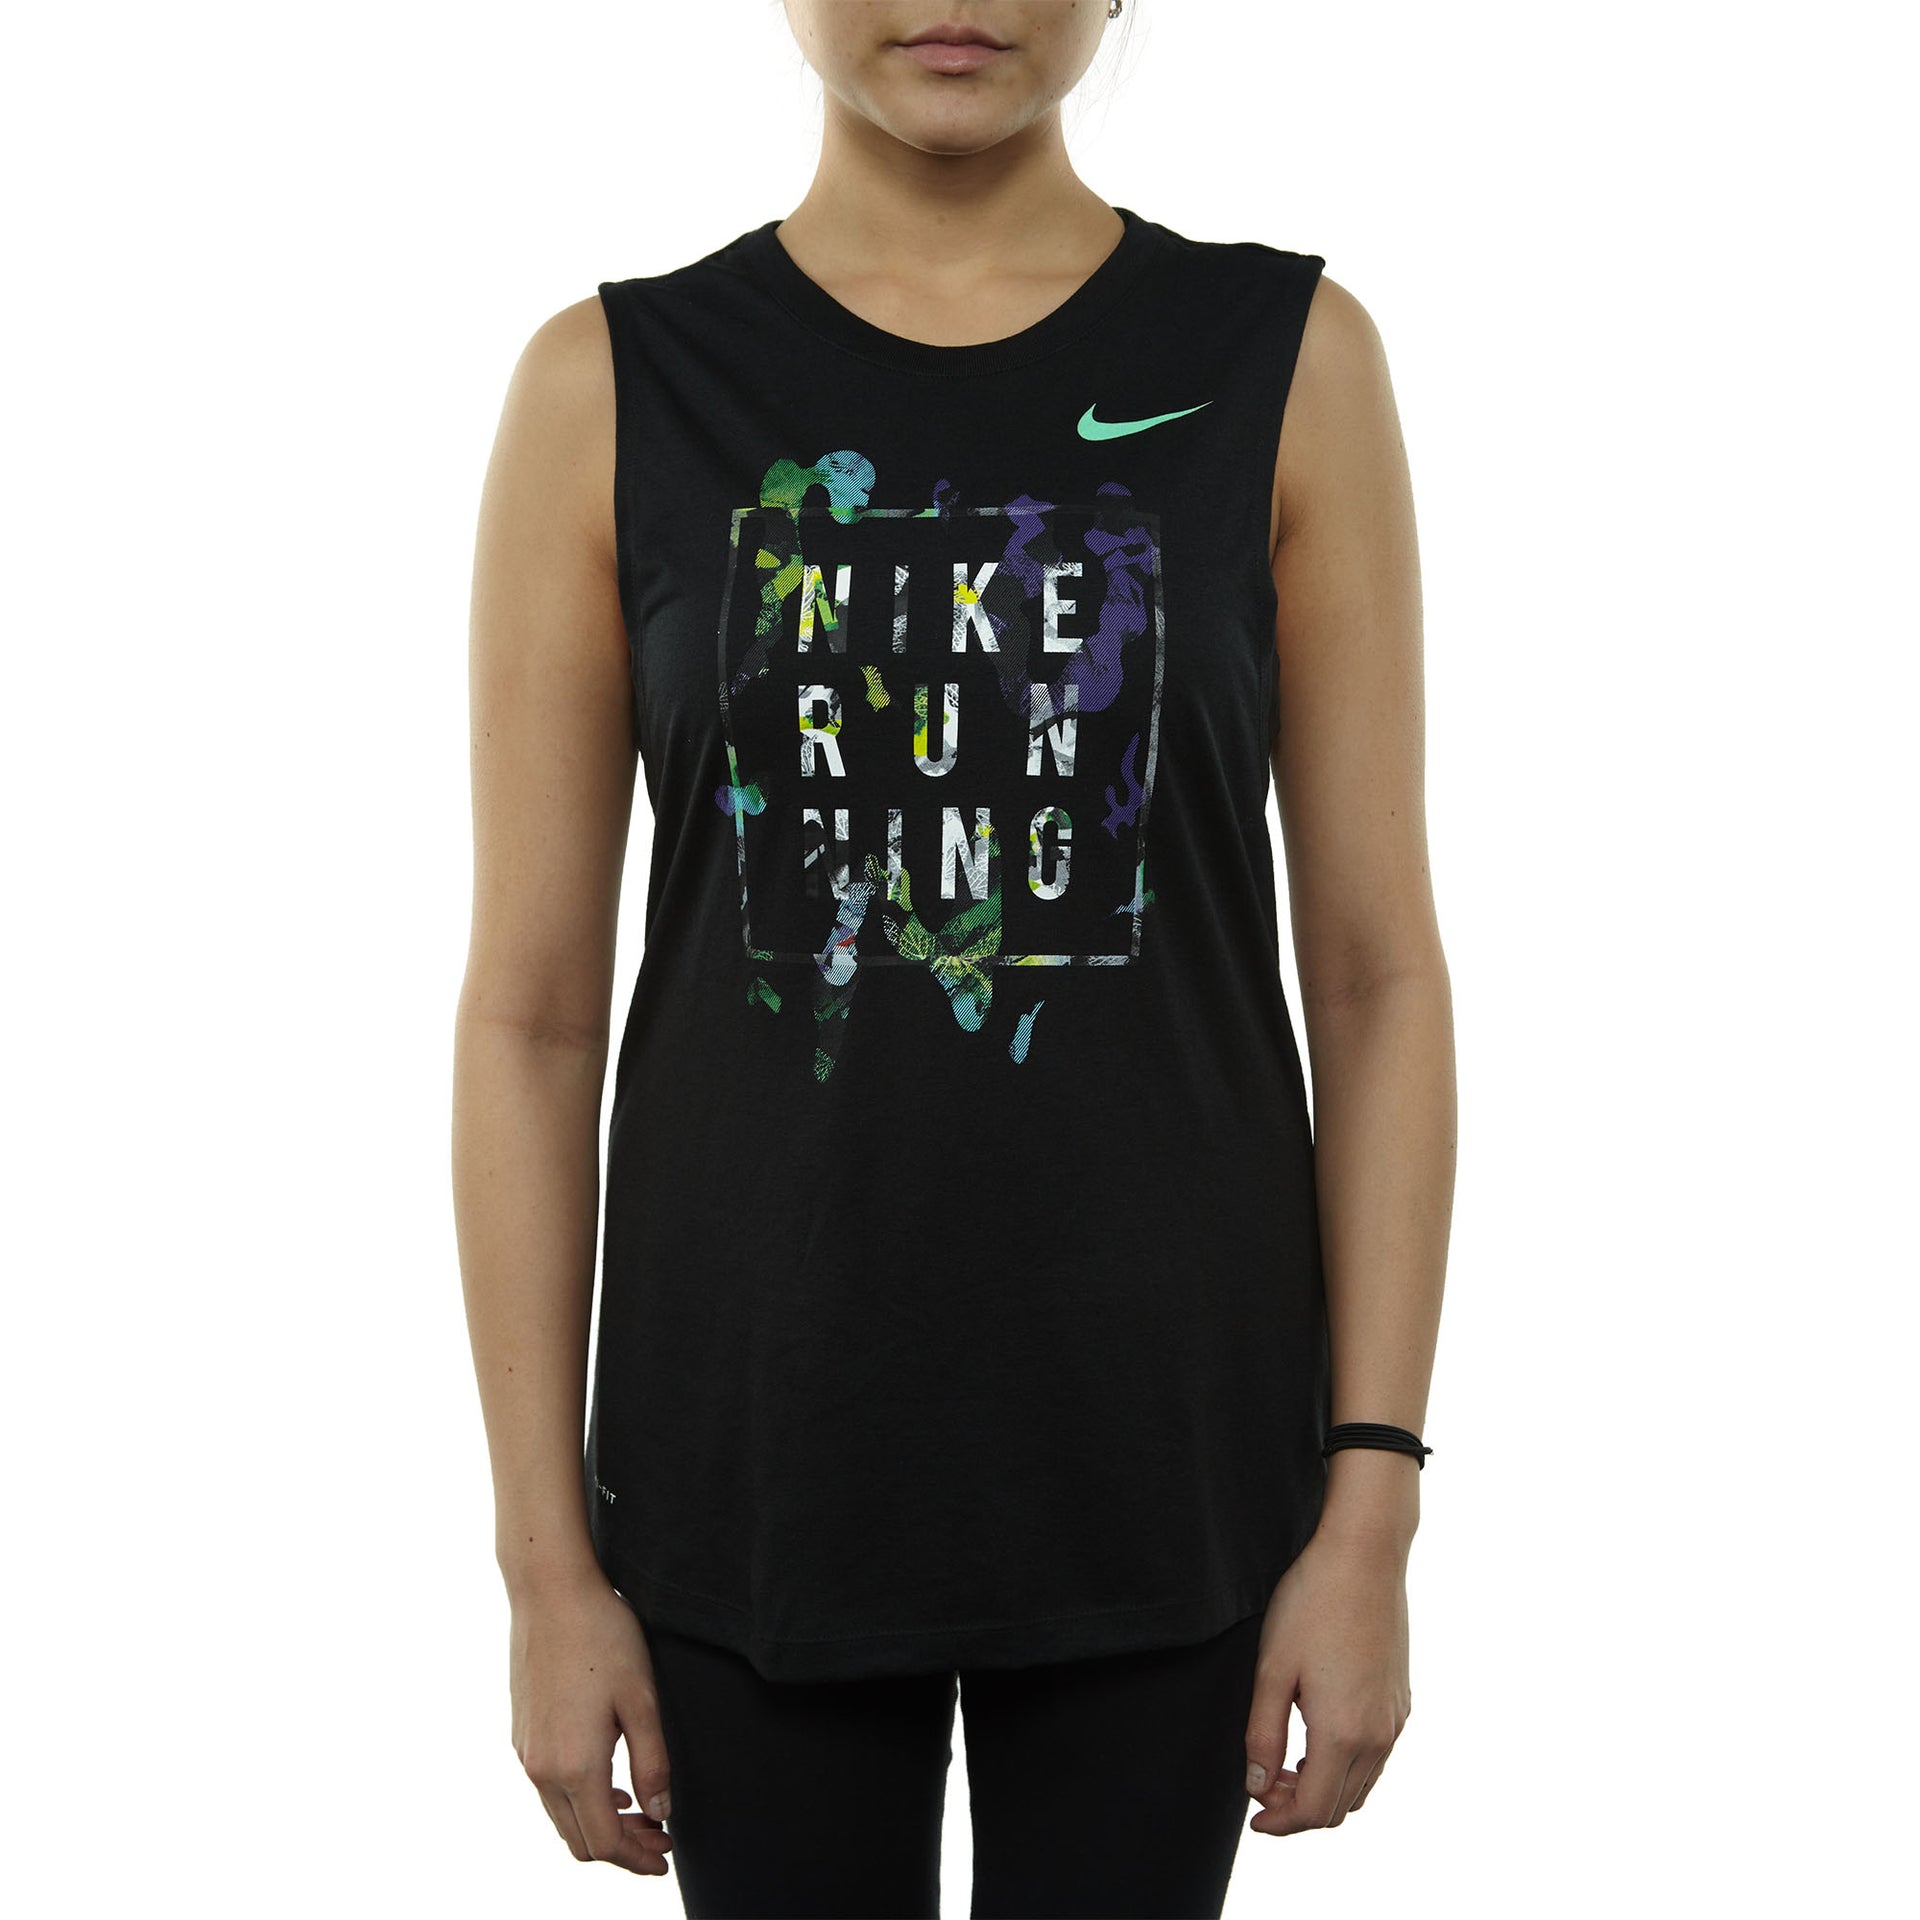 Nike Dry Running Solstice Tank Womens Style : 876868-010